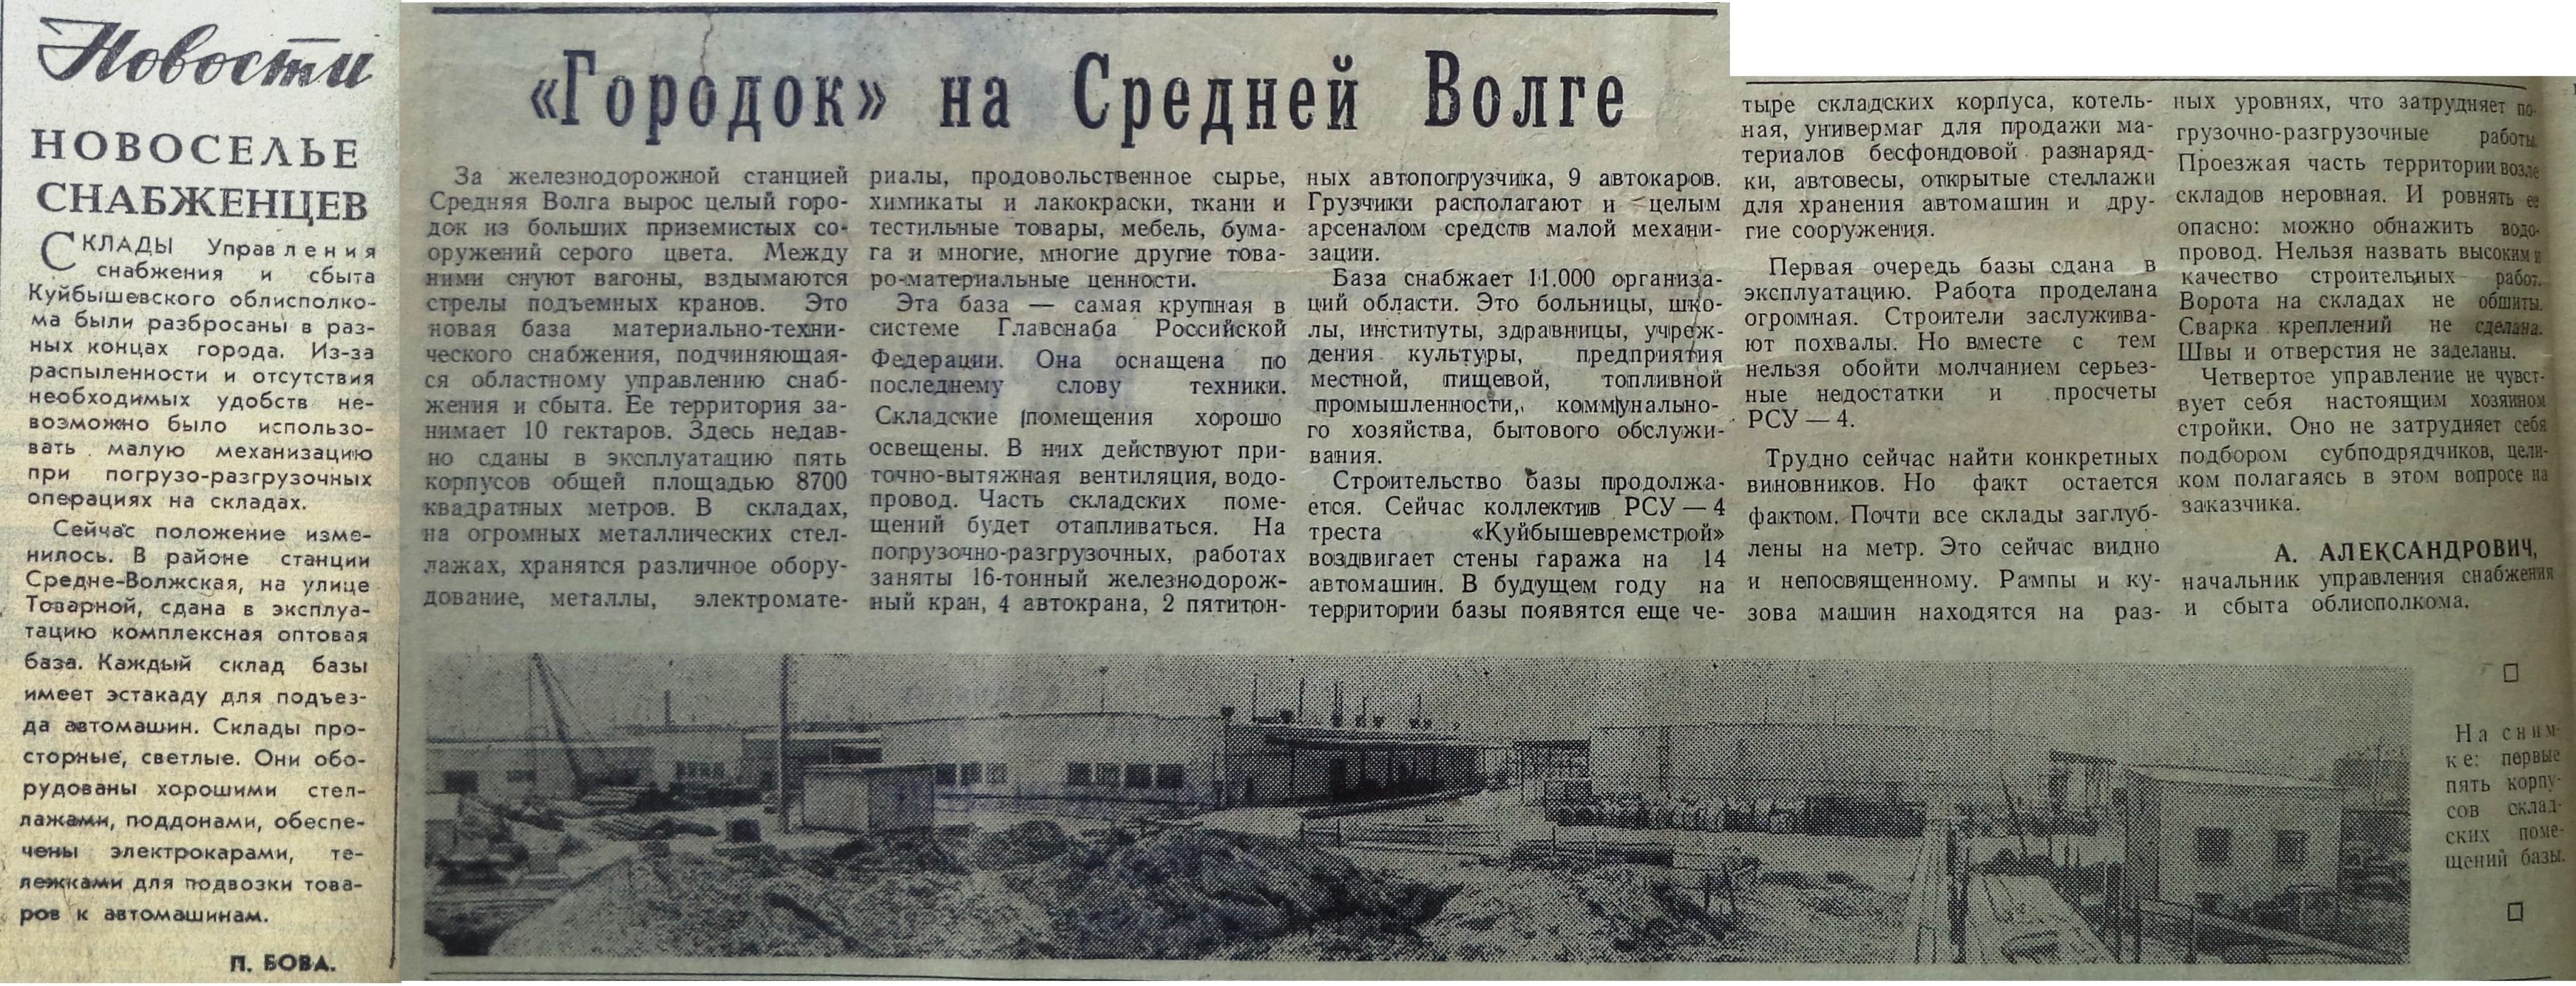 Товарная-ФОТО-16-ВЗя-1969-09-24-новая опт. база на ул. Товарной-min-min